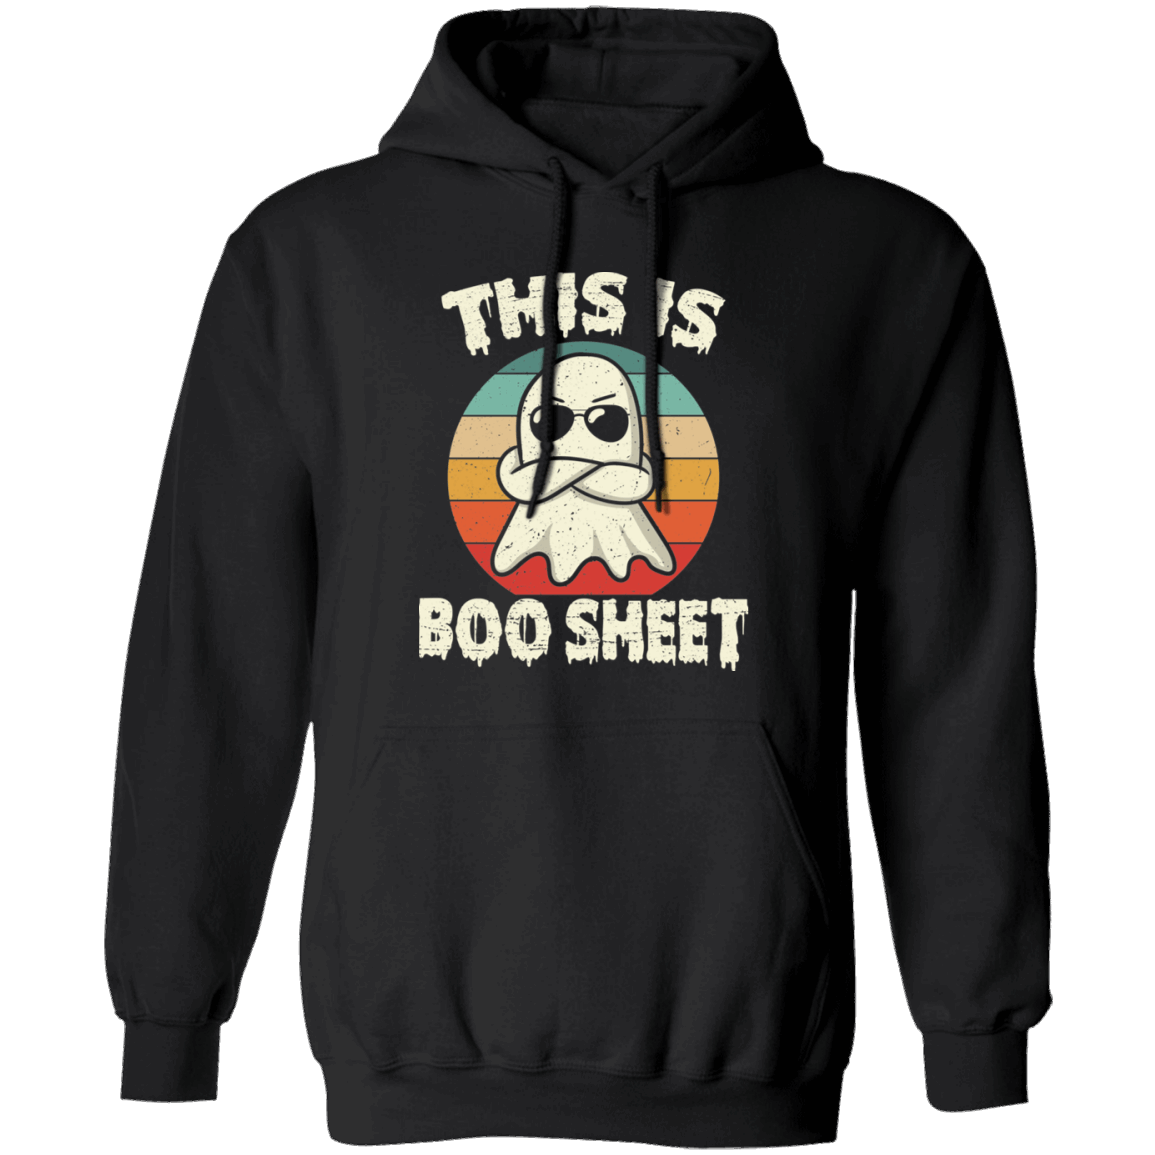 This is Boo Sheet! #2 - Unisex Shirt/Hoodie